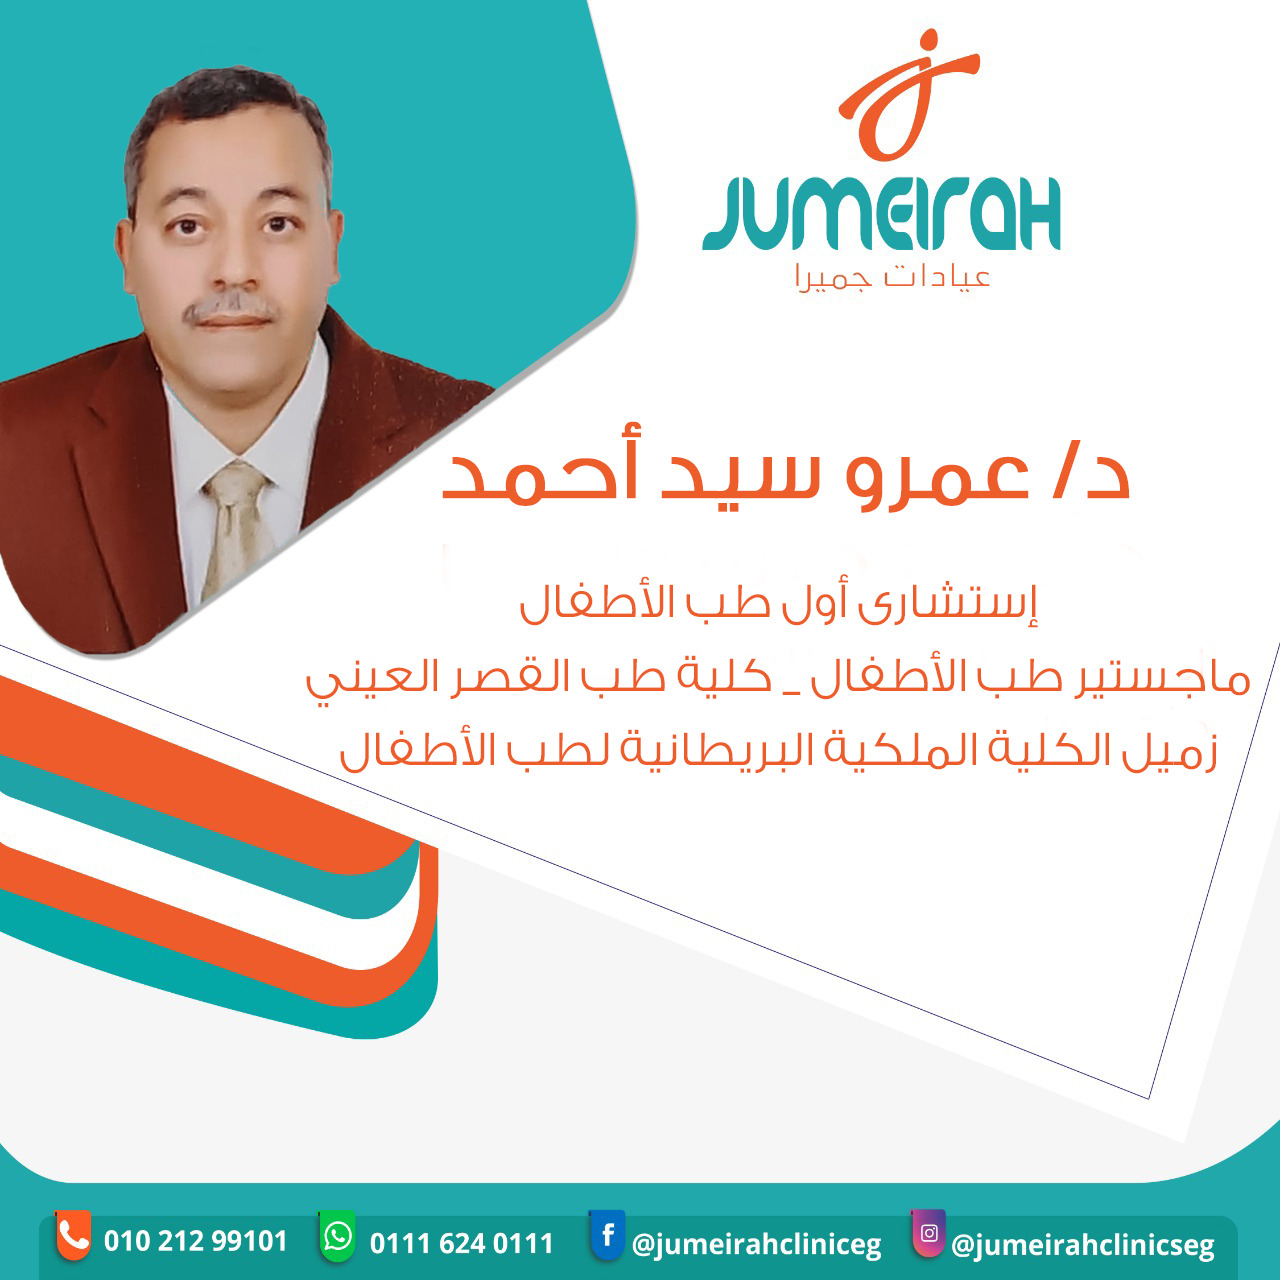 Dr. Amro El-Sayed Ahmed